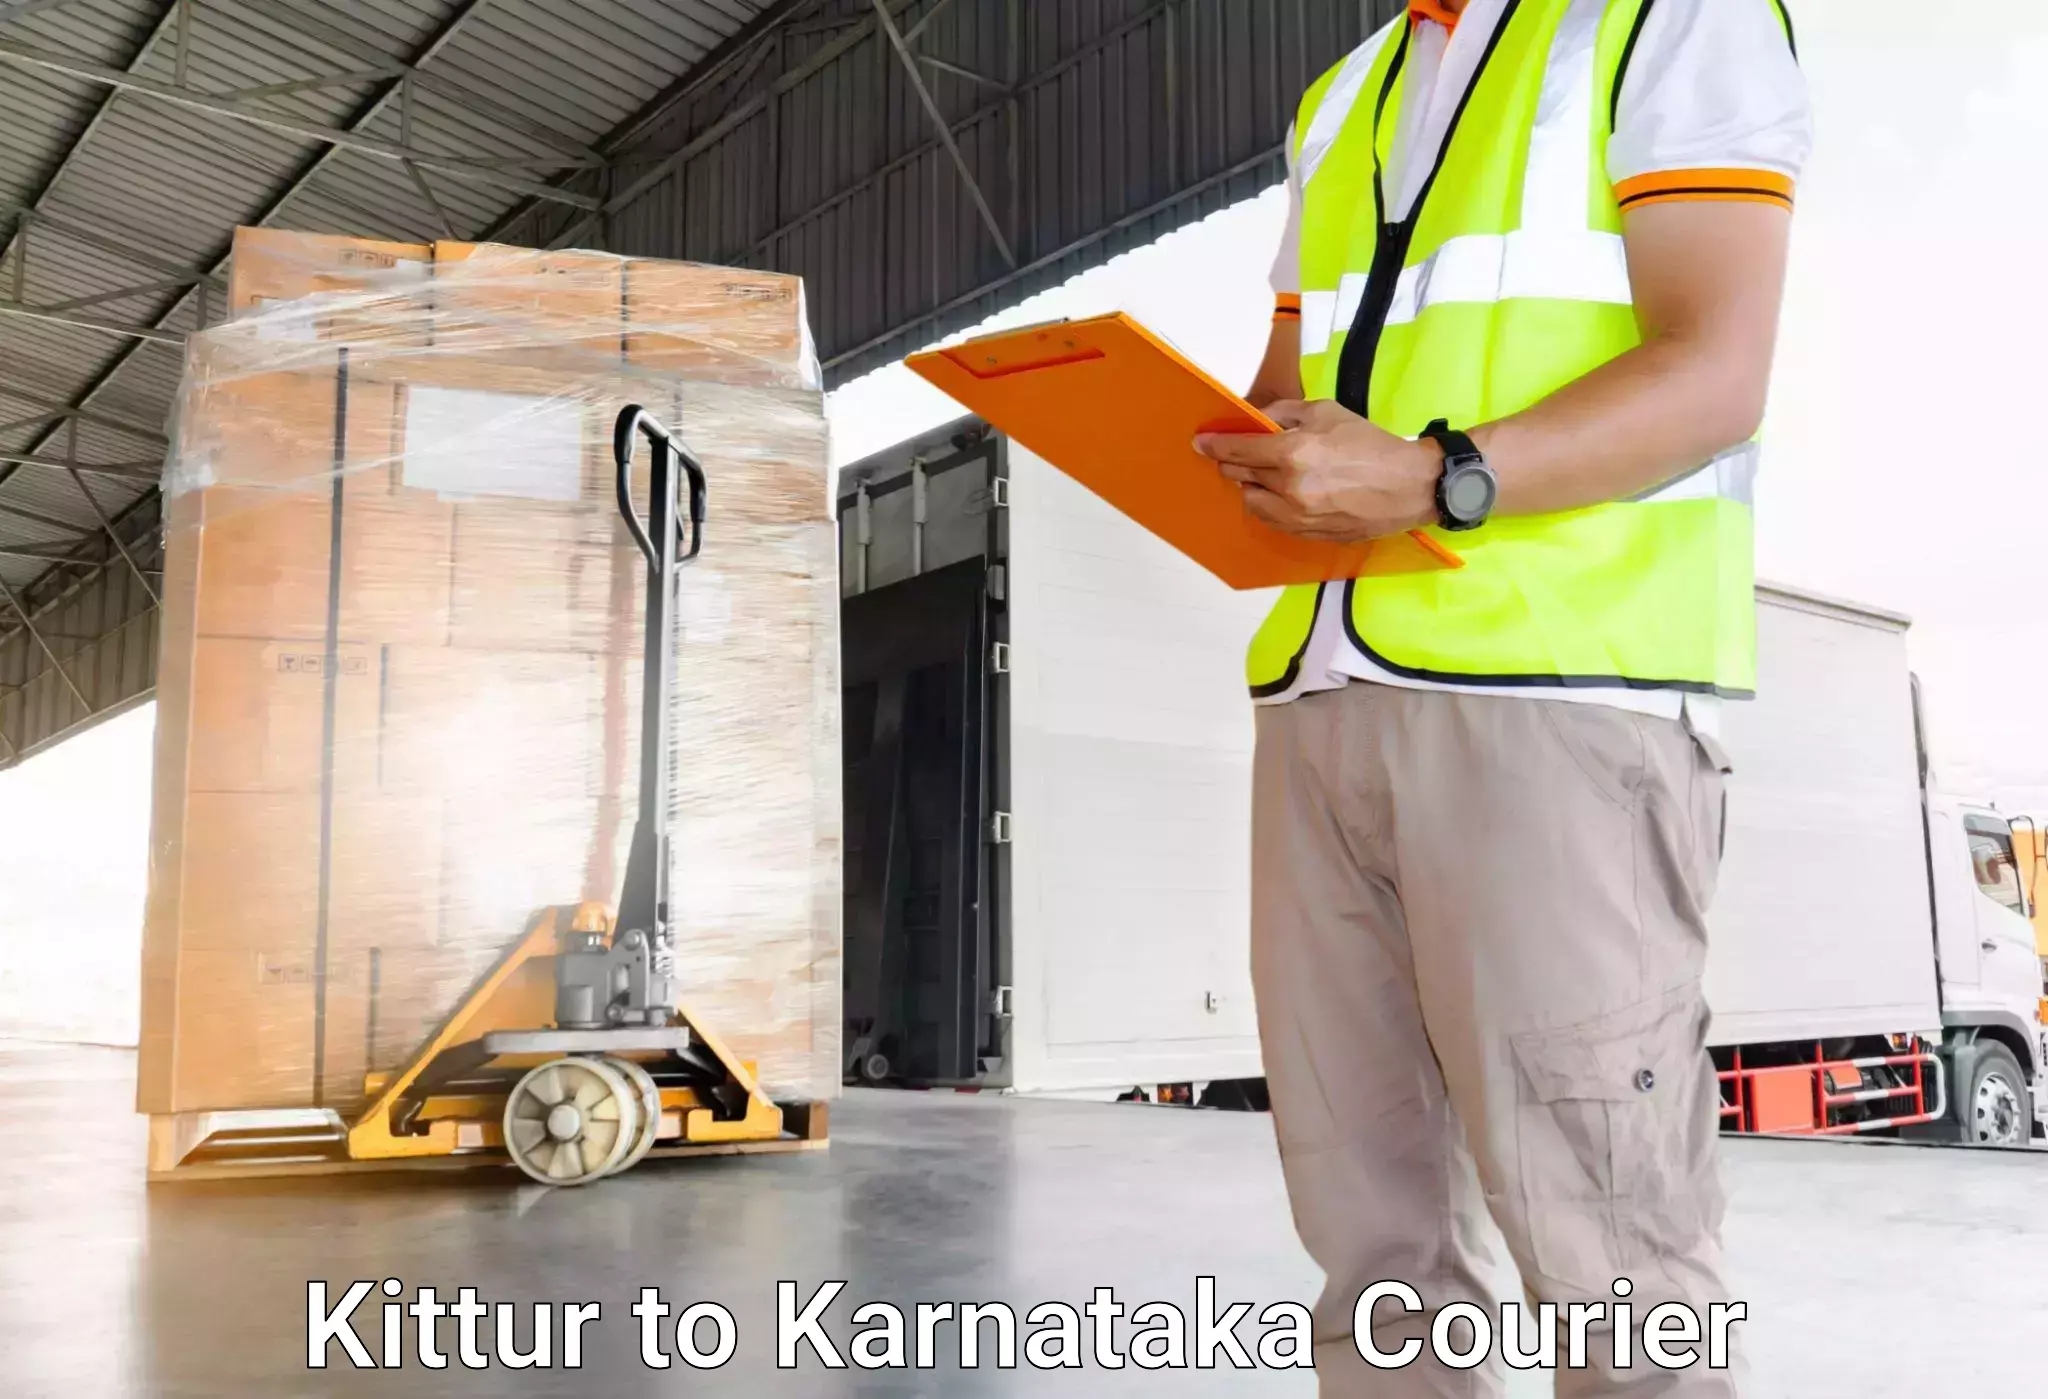 Luggage delivery network Kittur to Karnataka